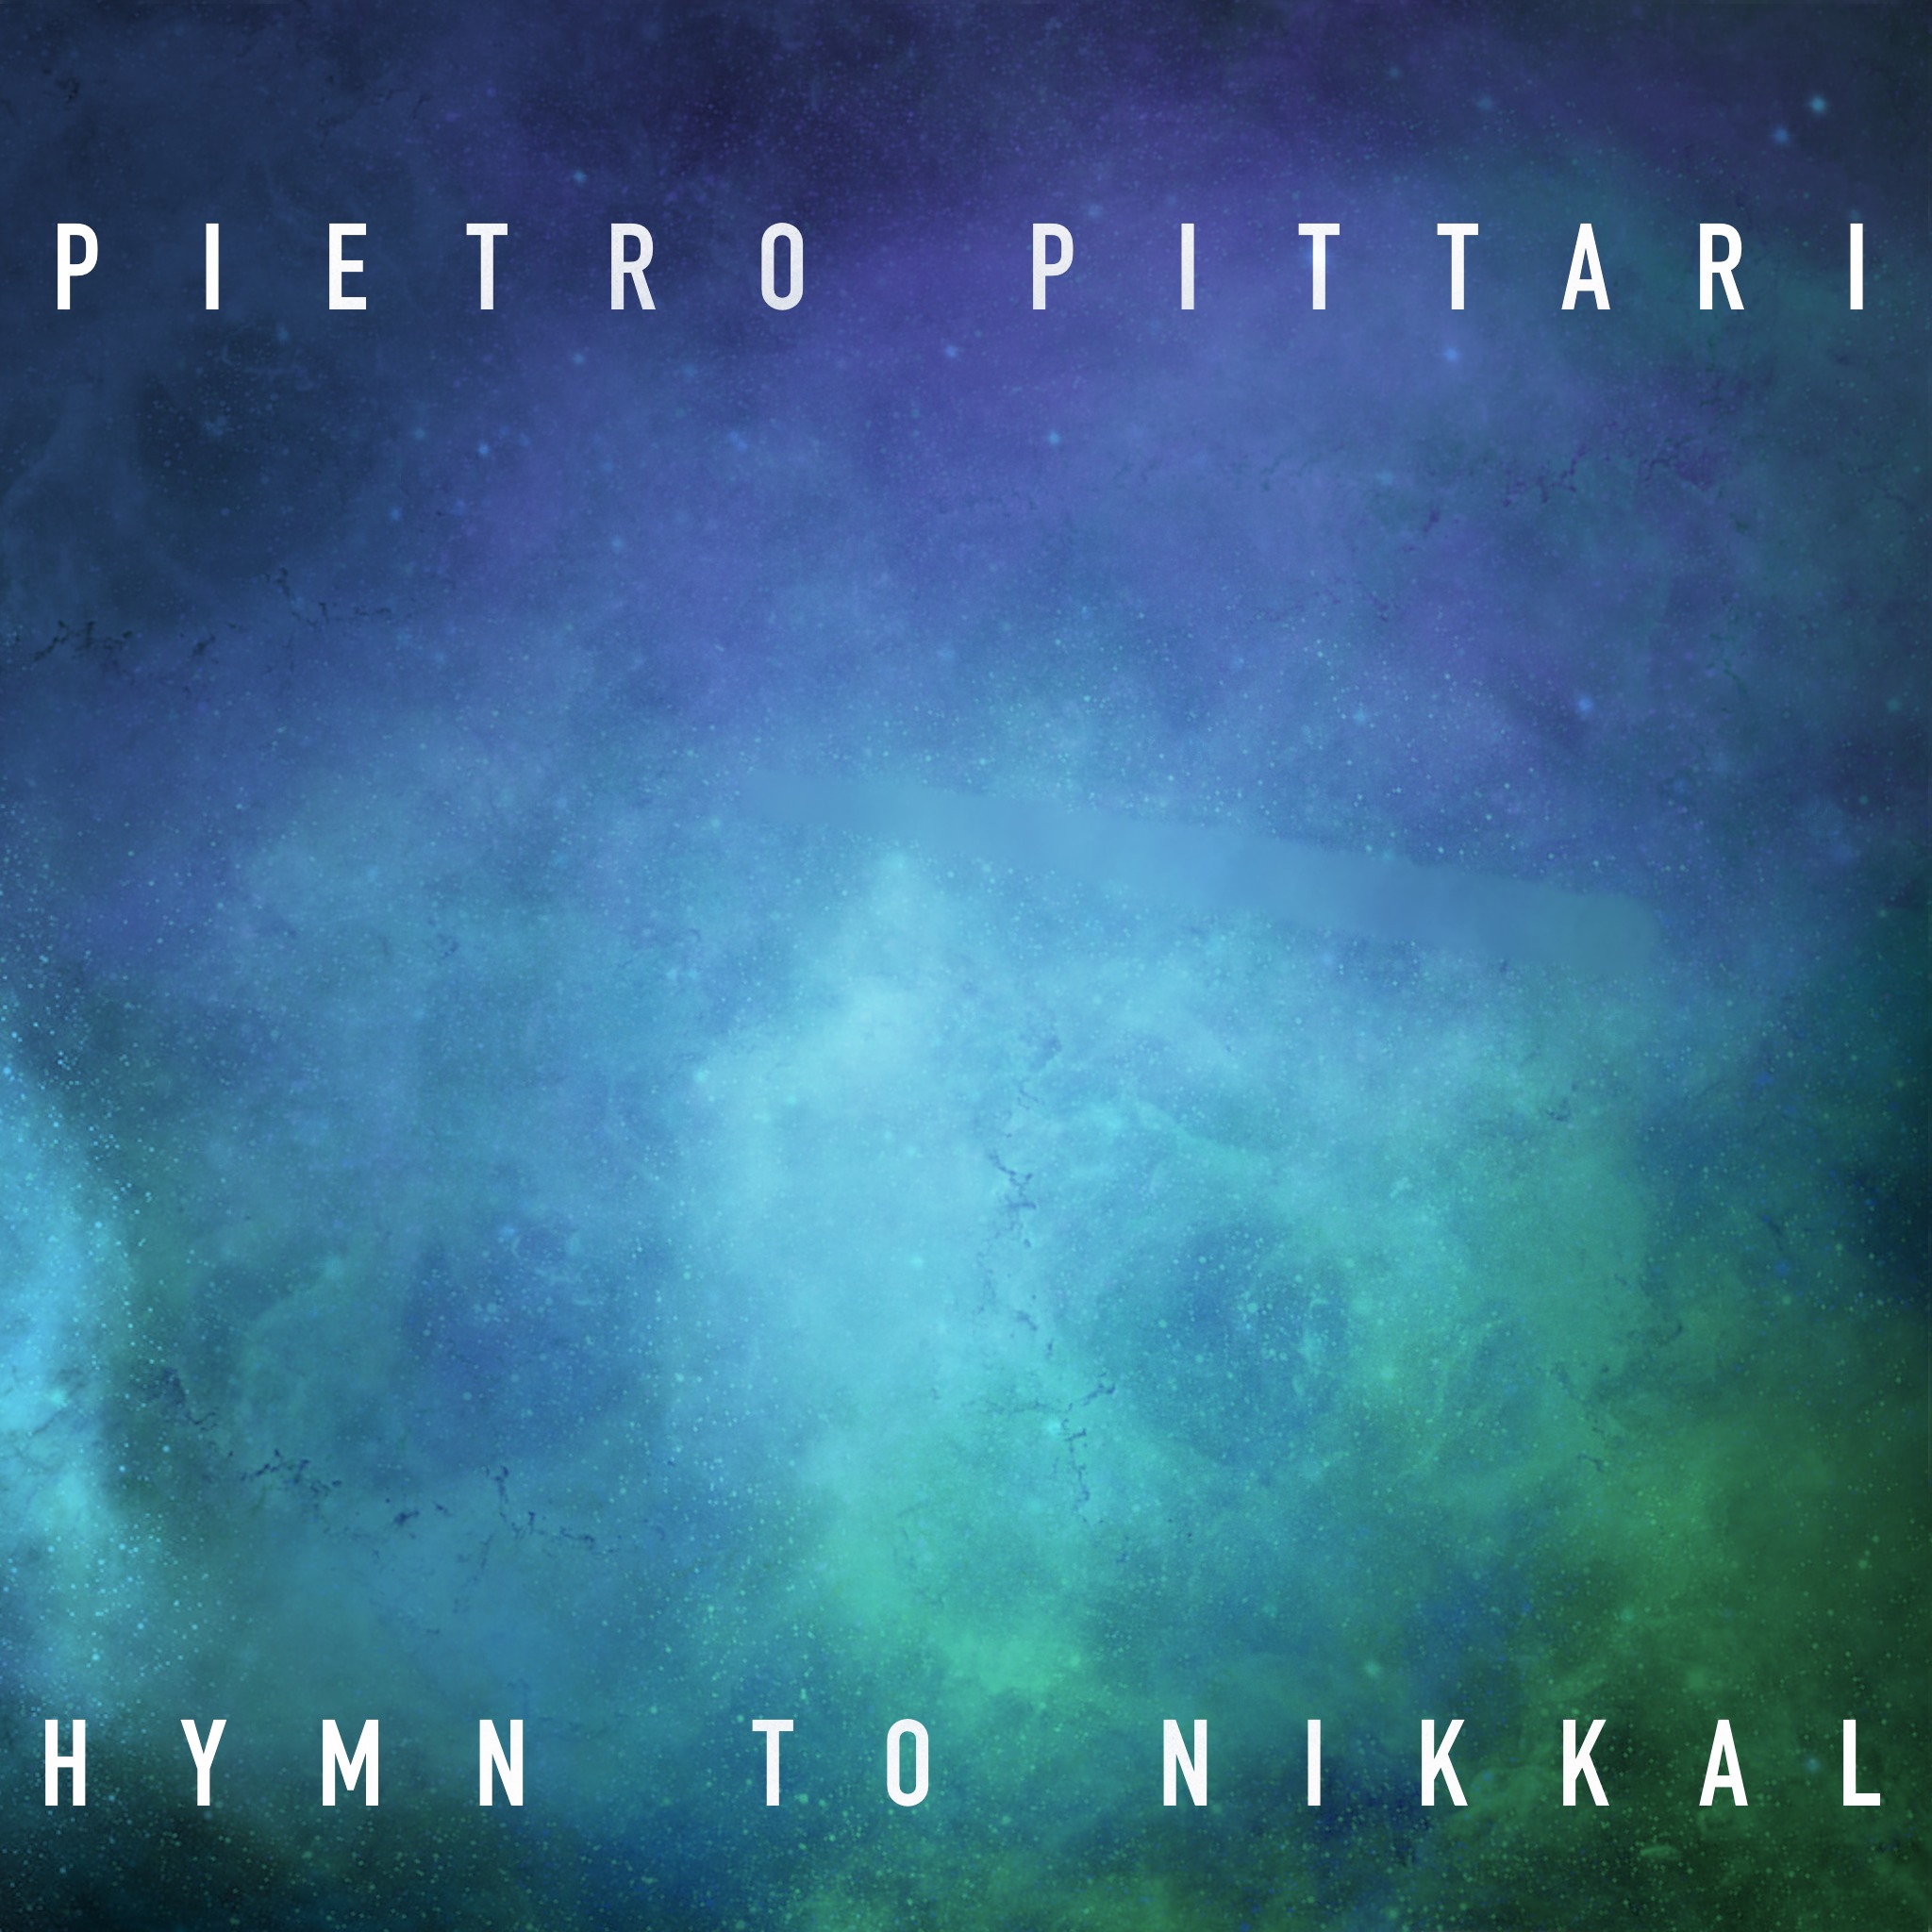 Vergonzoso en progreso Relativo New Single: “Hymn to Nikkal” – Pietro Pittari